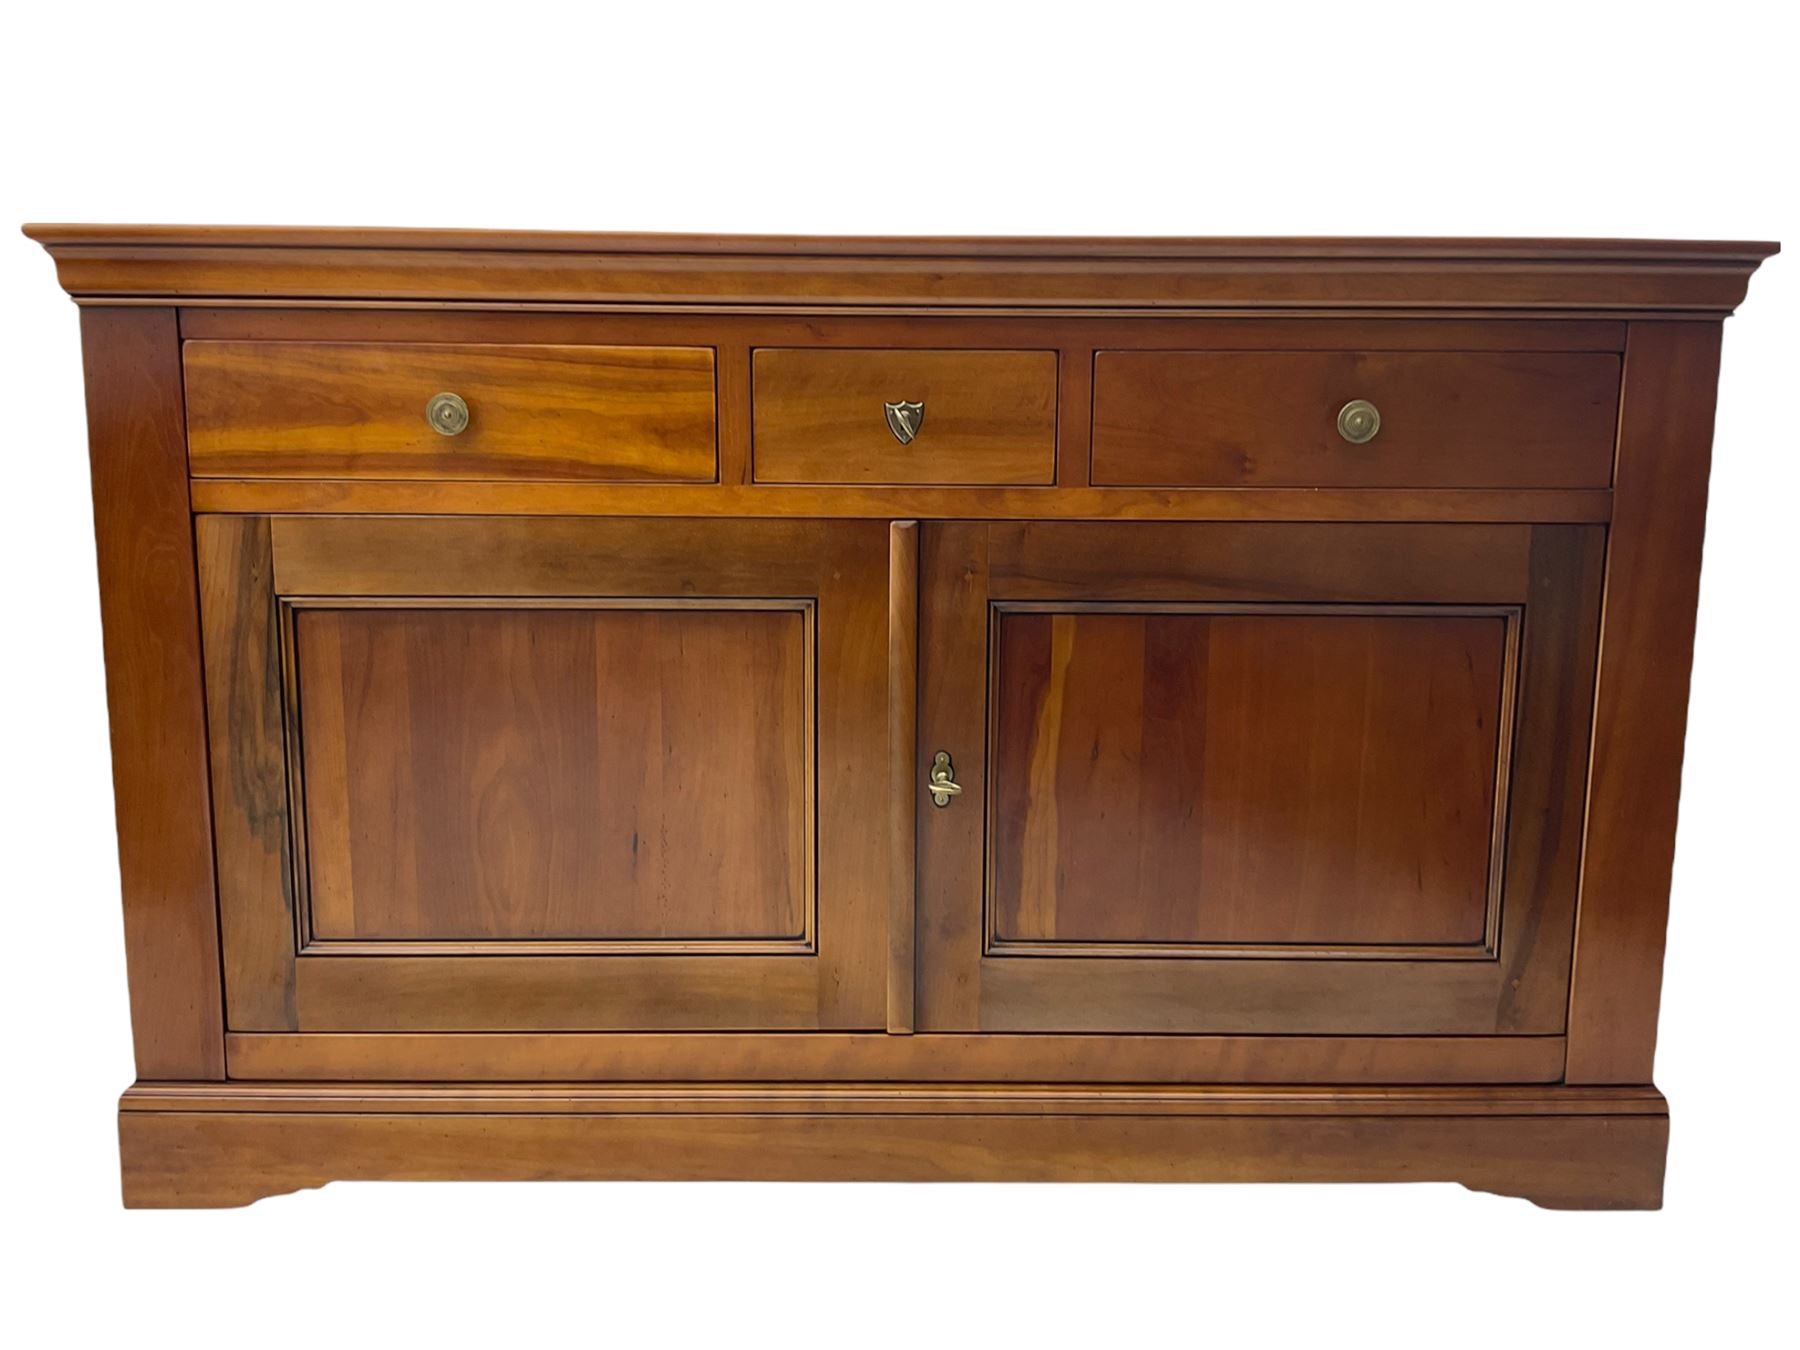 Grange Furniture cherry wood sideboard - Image 8 of 8